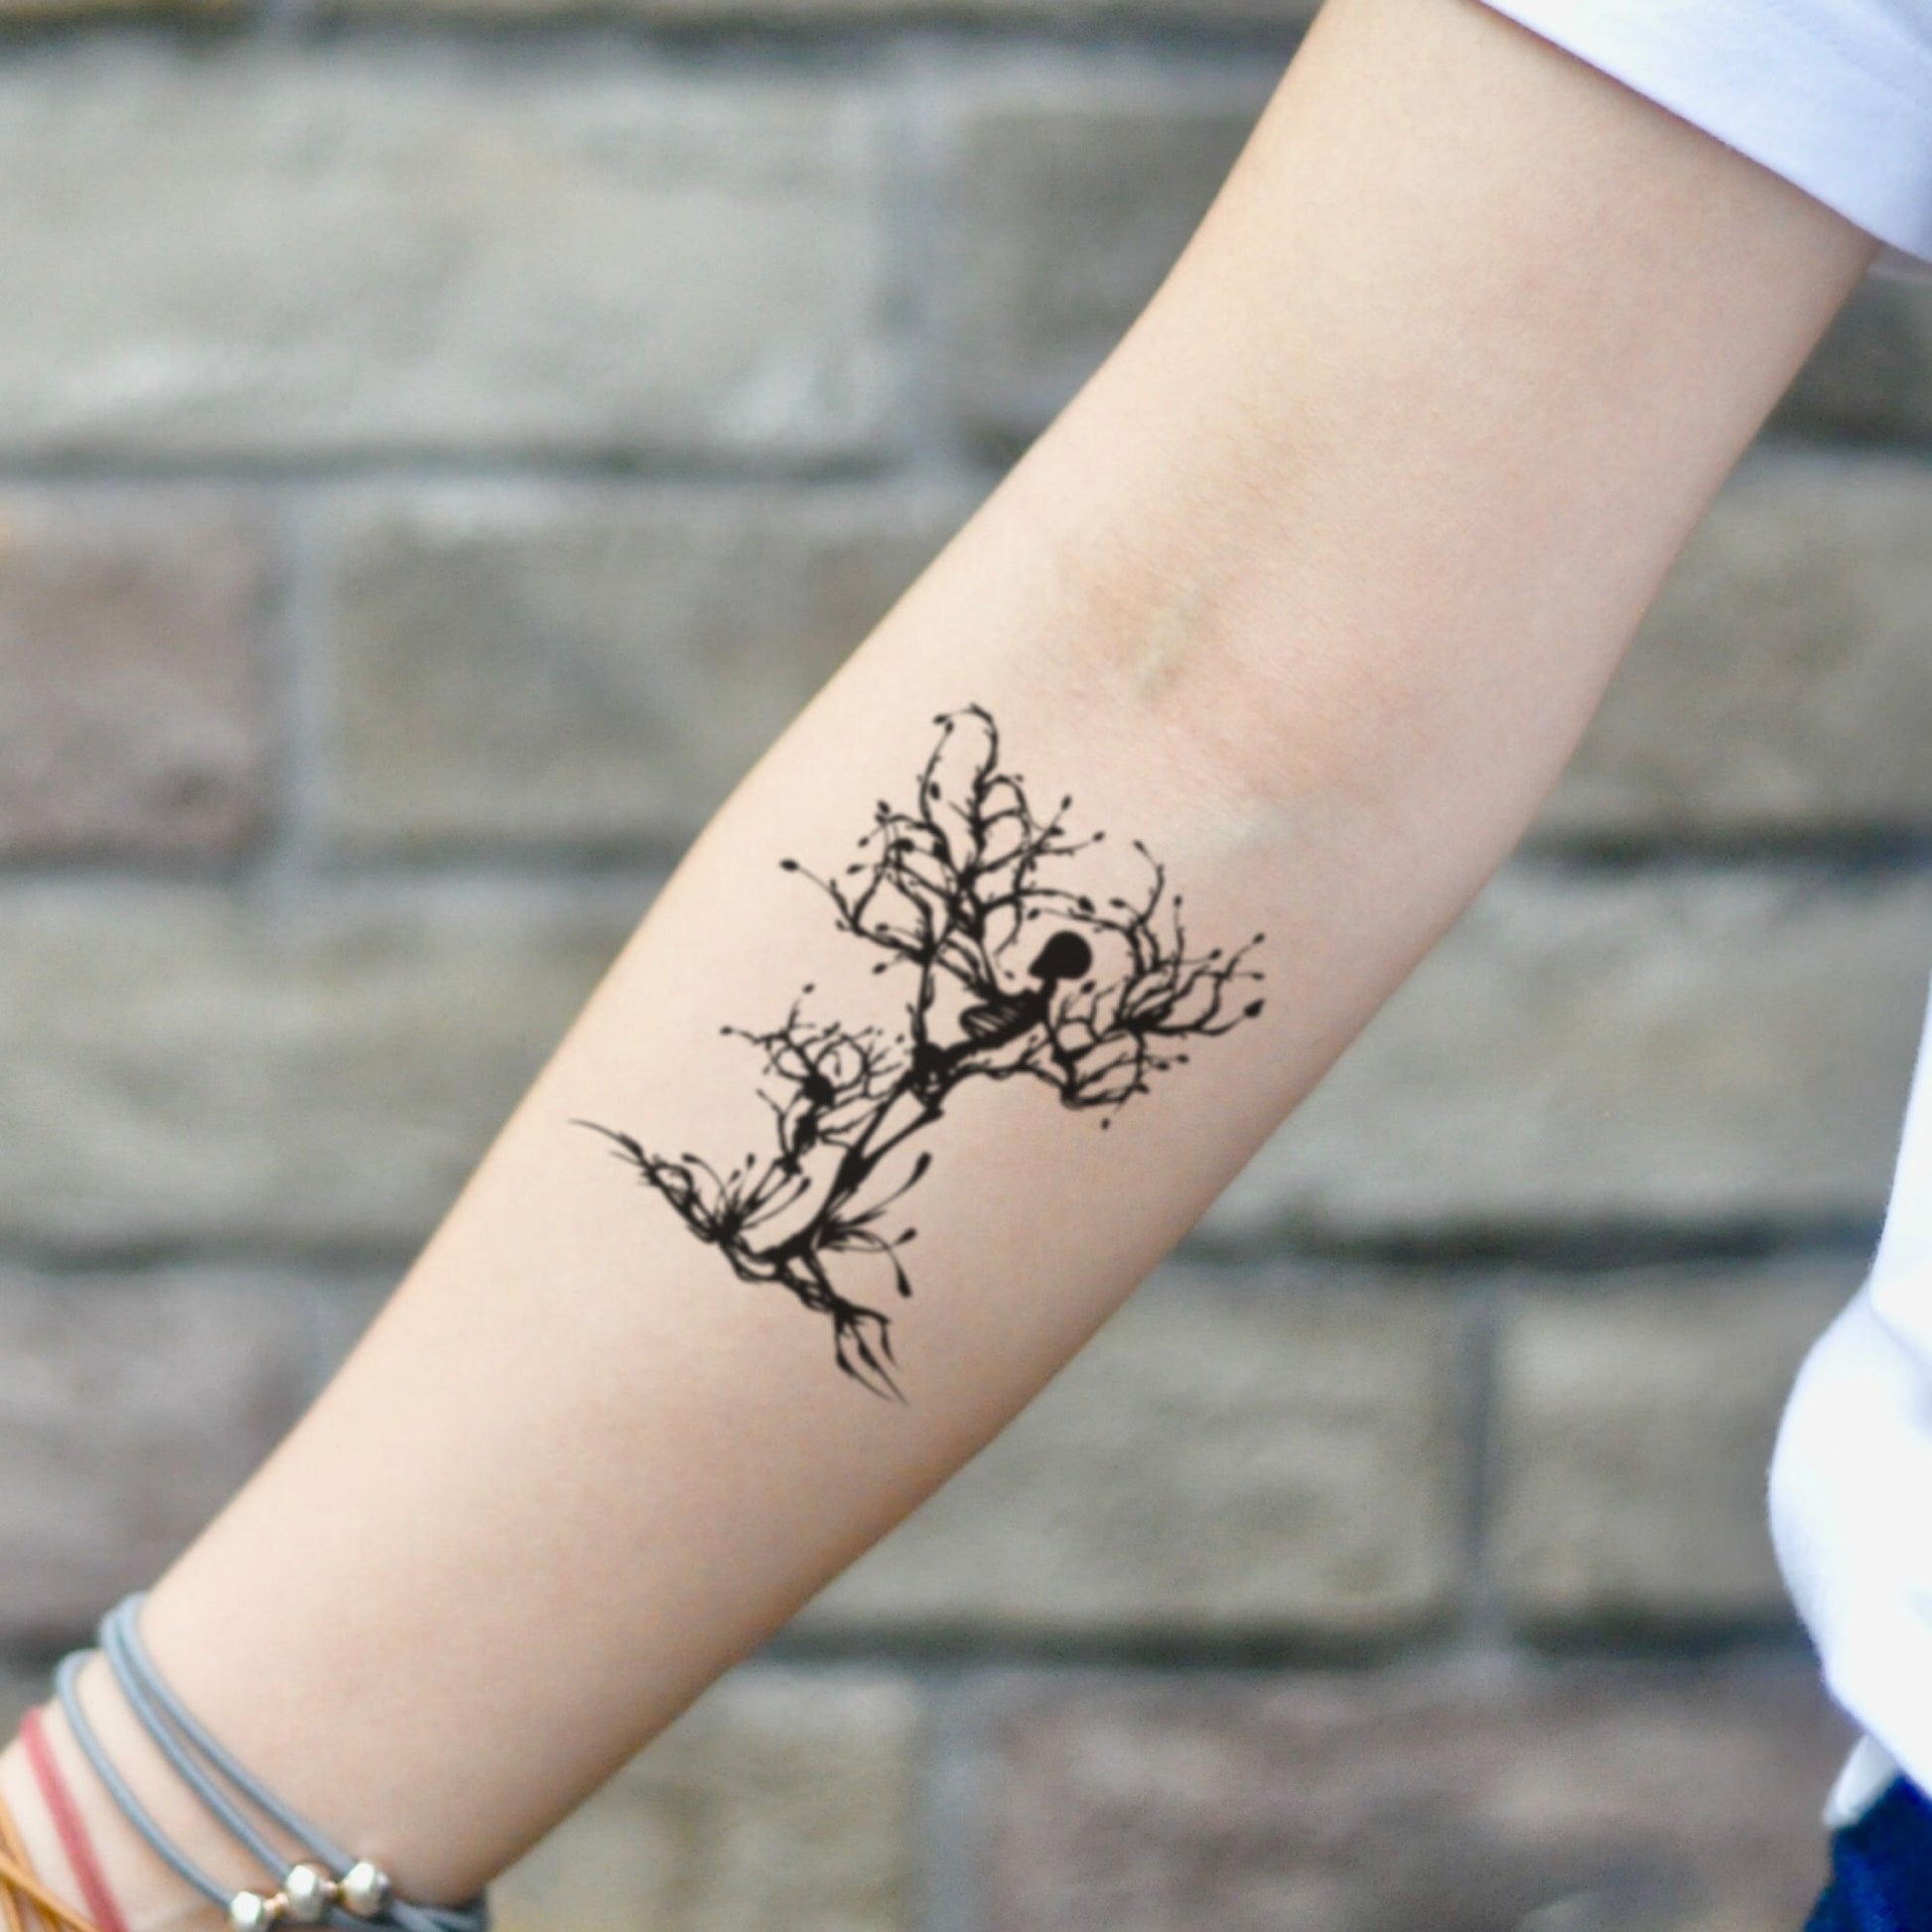 fake small skeleton tree illustrative temporary tattoo sticker design idea on inner arm